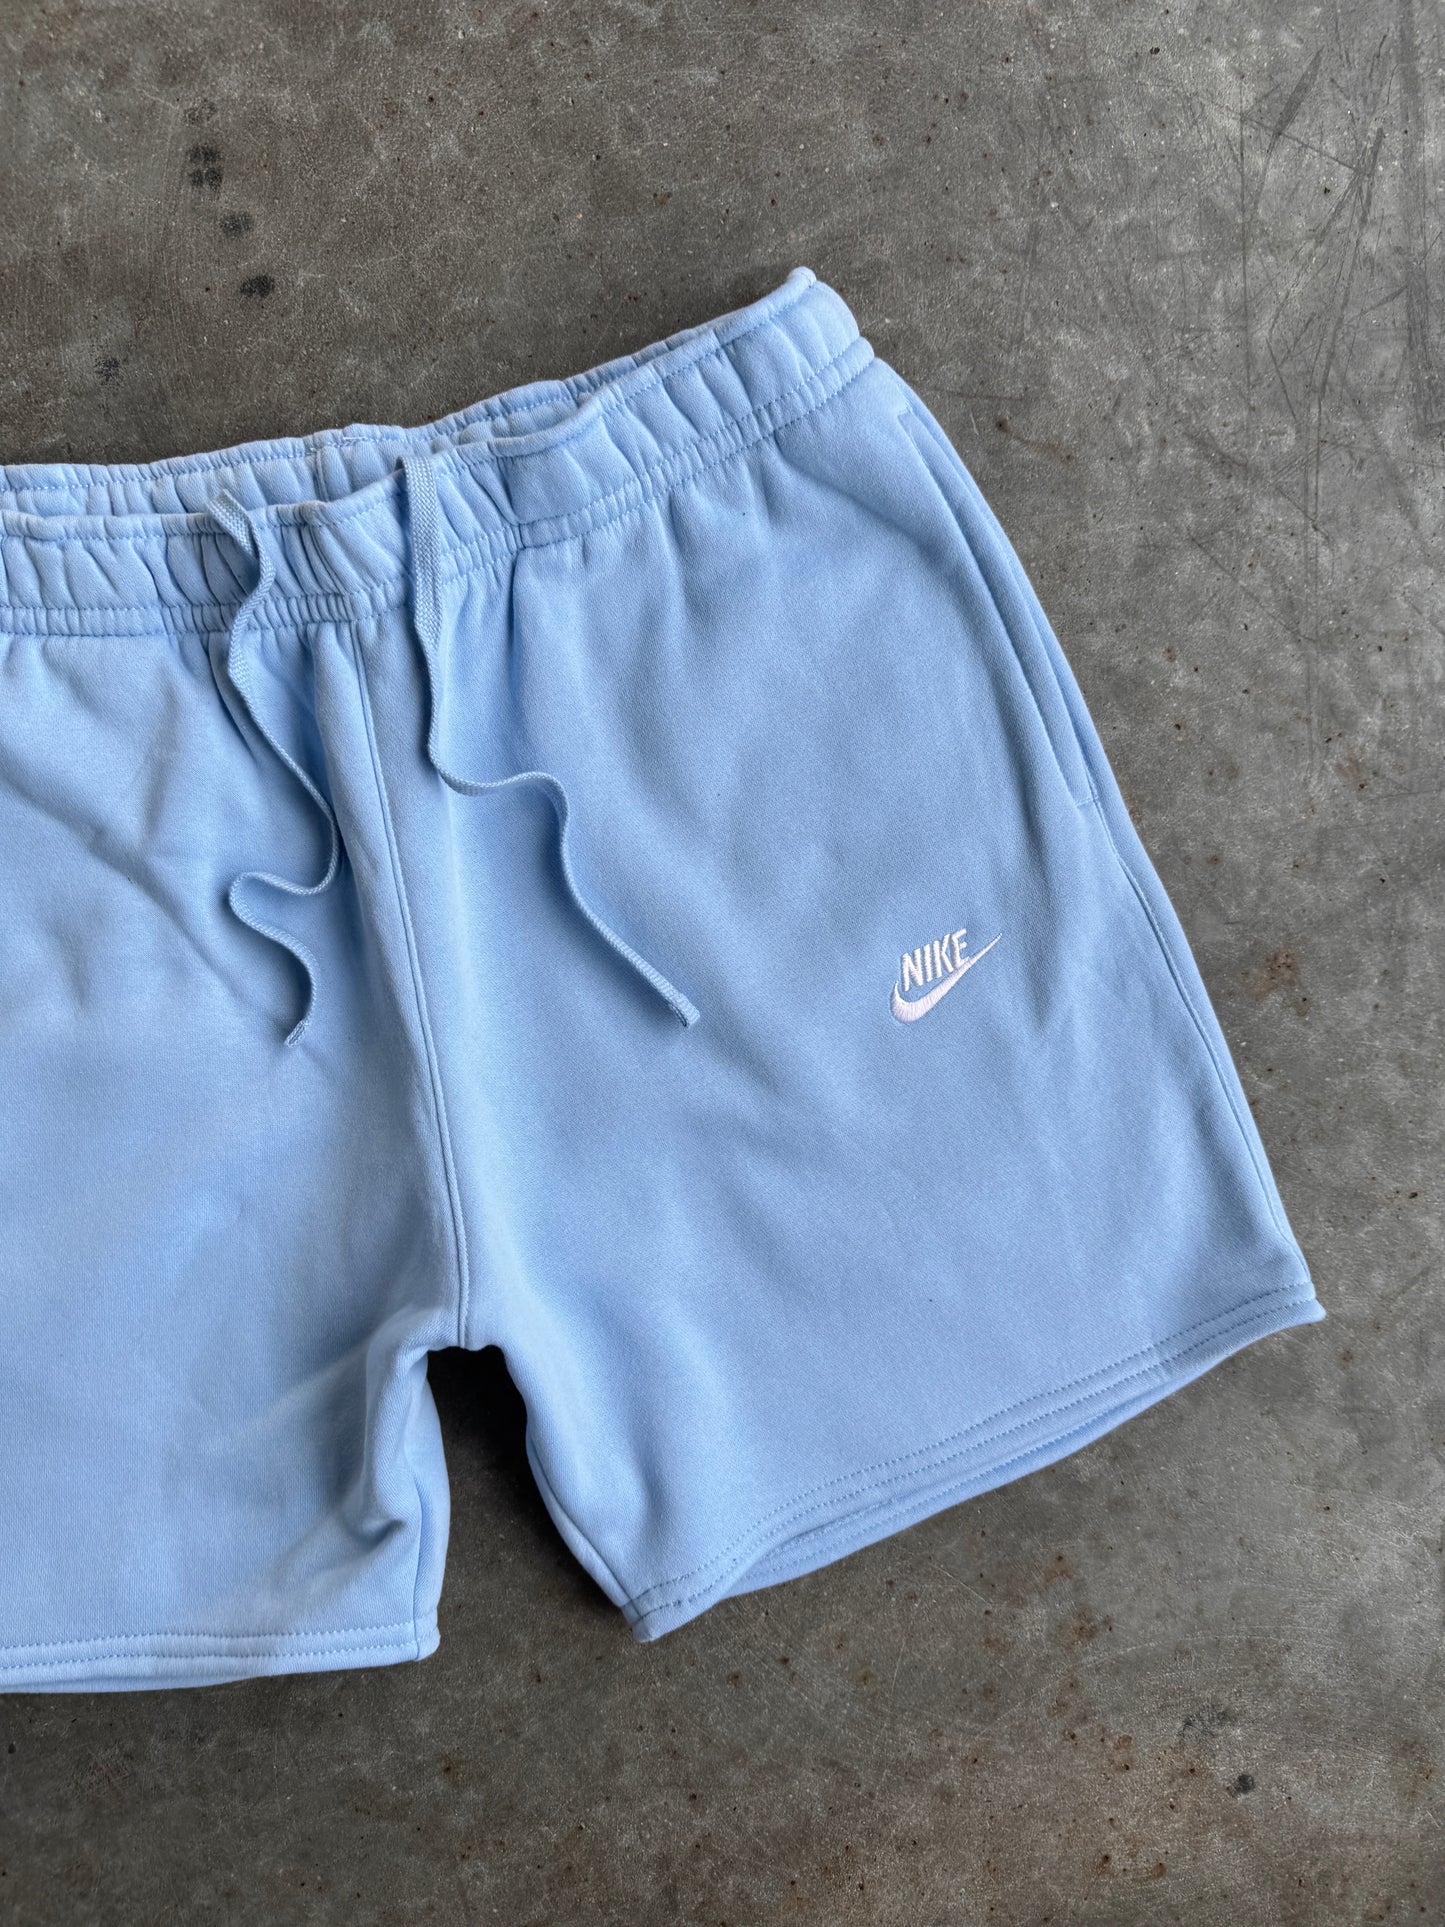 Reworked Sky Blue Nike Shorts - XL